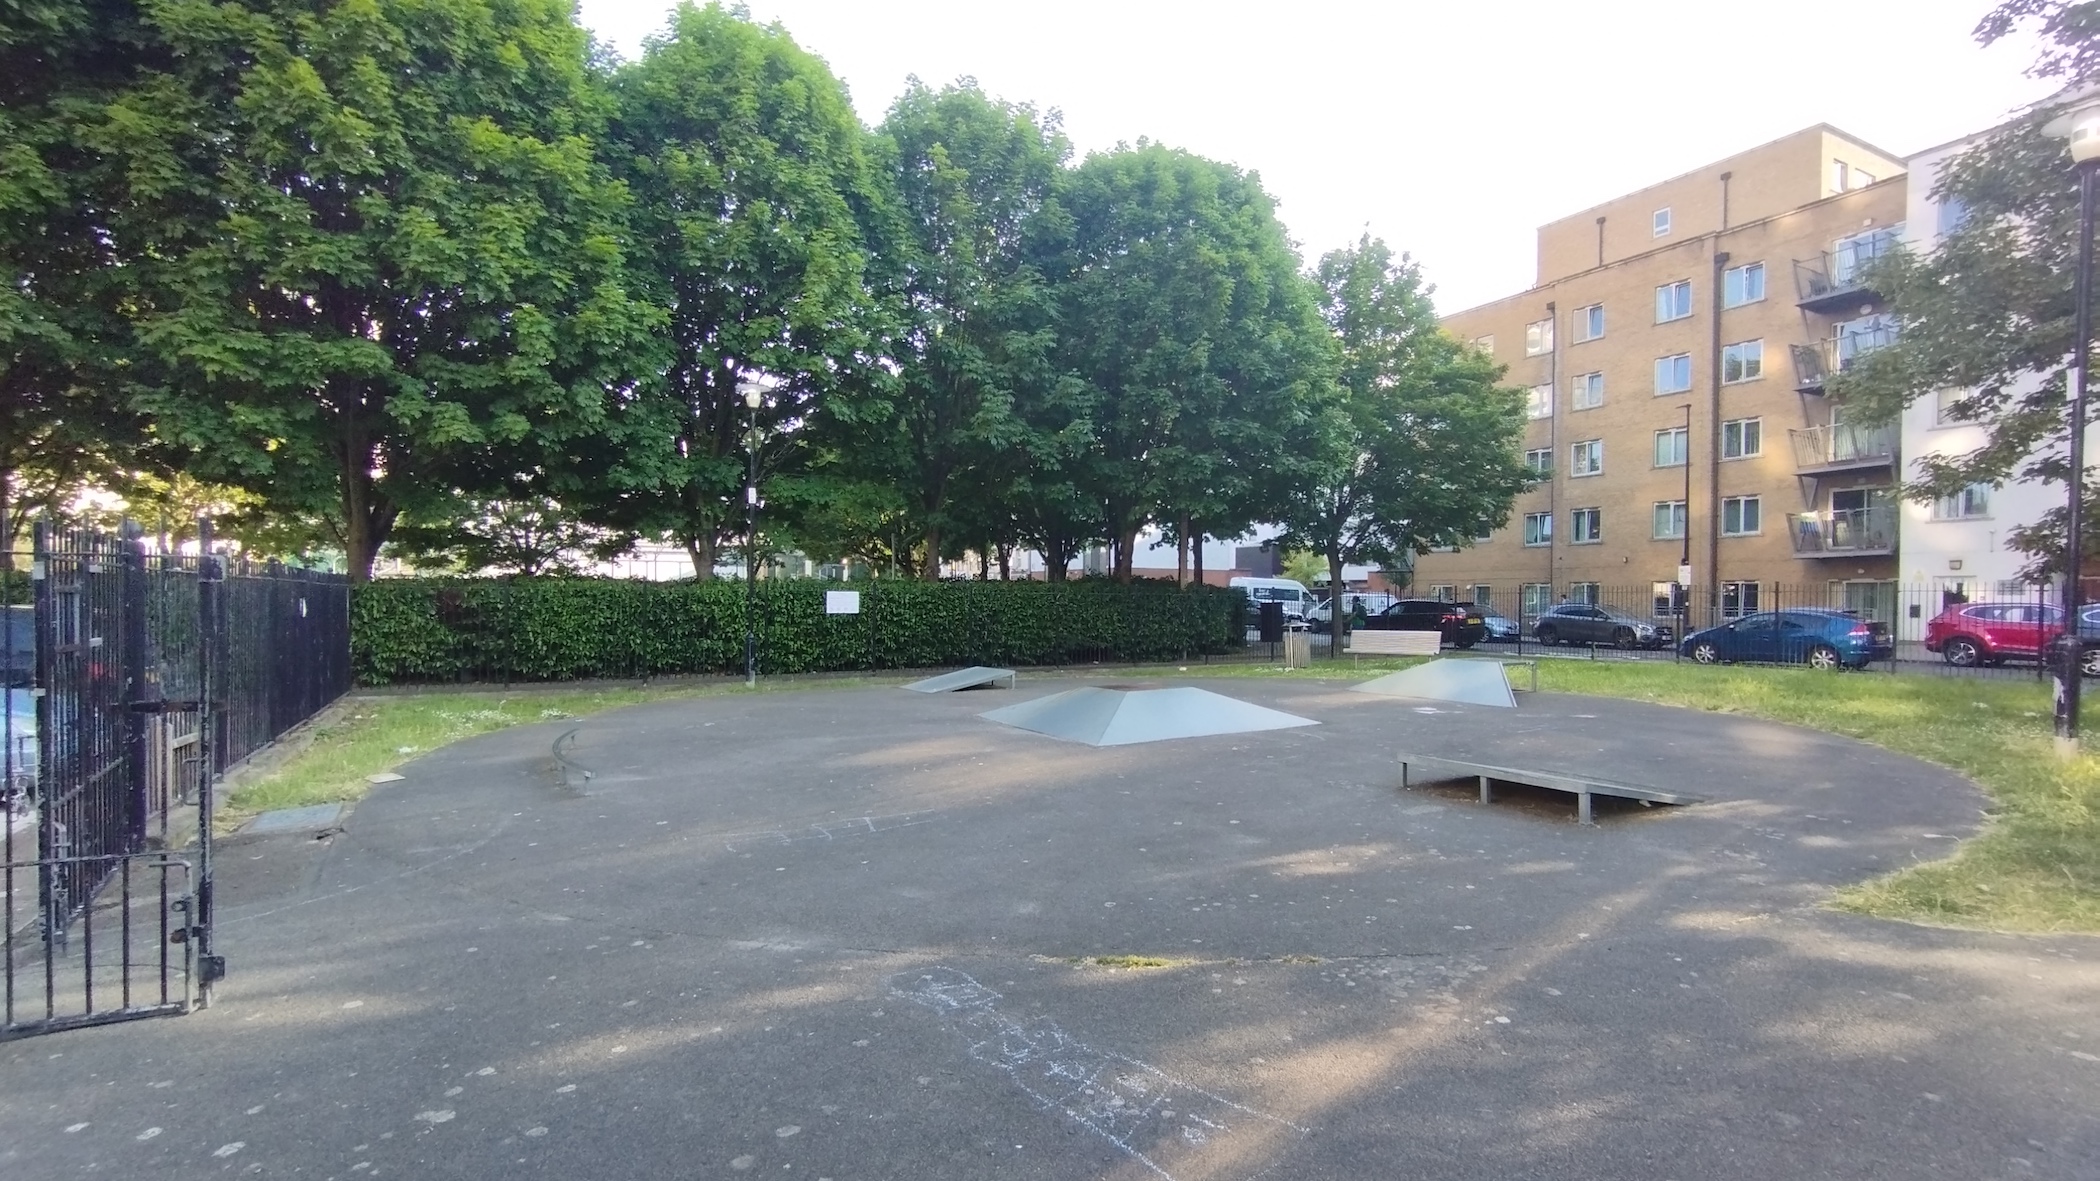 Strafford street skatepark